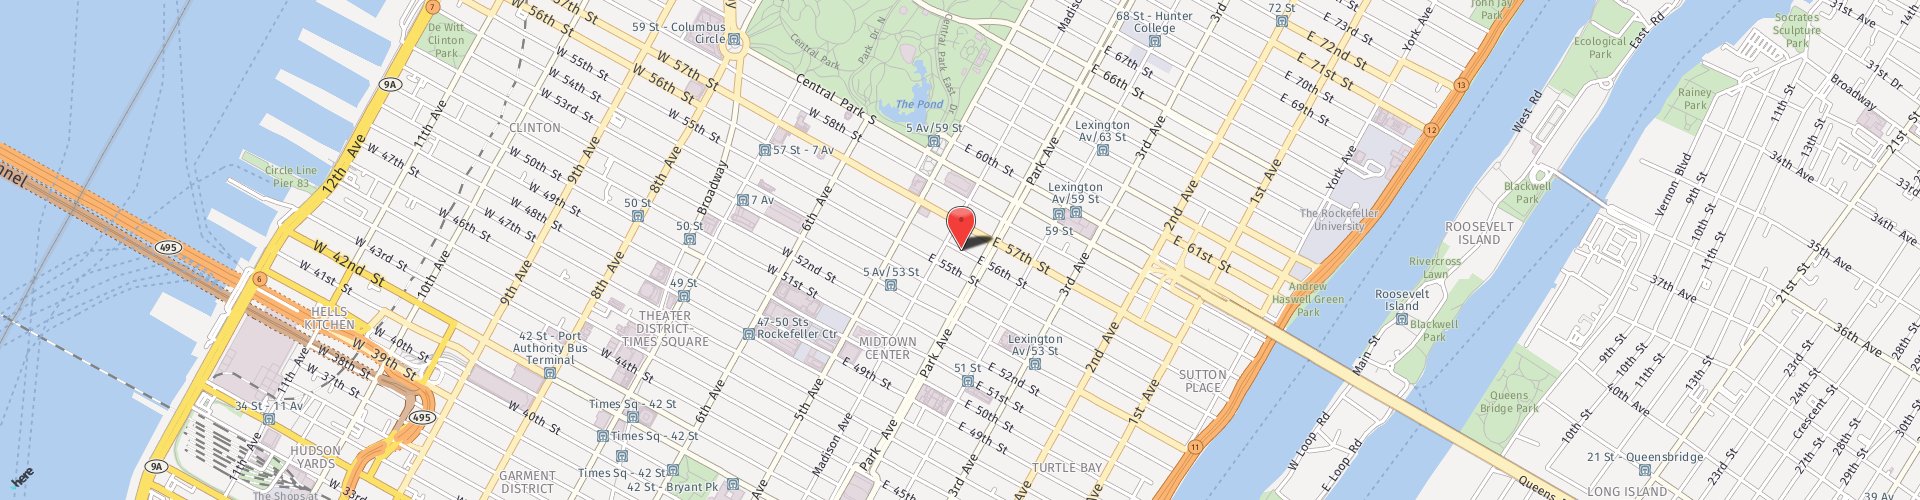 Location Map: 60 East 56th Street (at Park Ave) New York, NY 10022